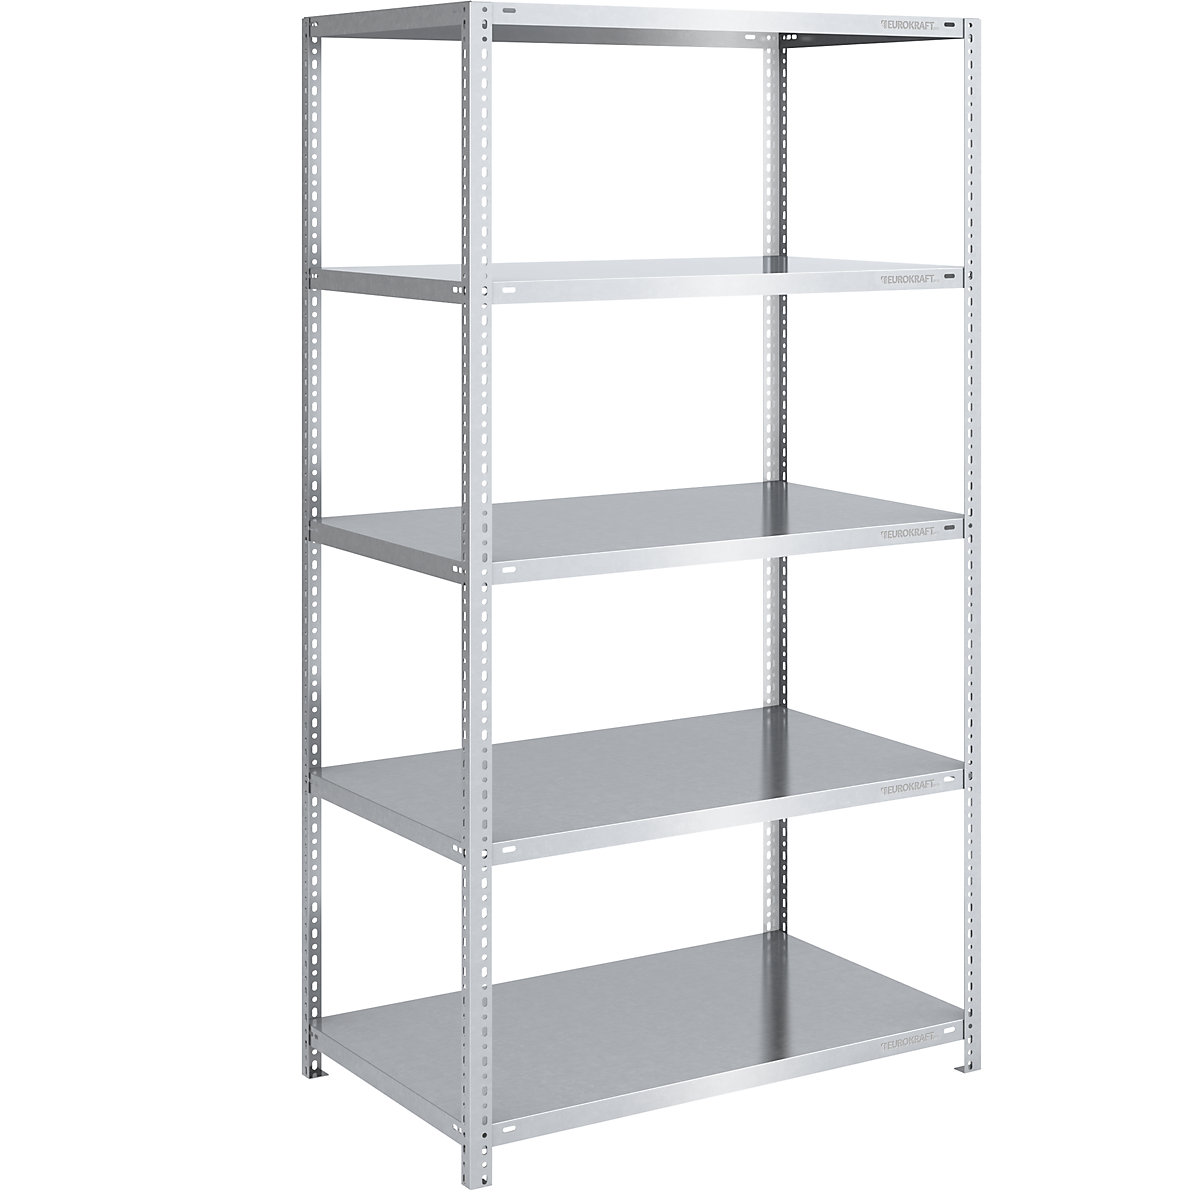 Bolt-together shelf unit, light duty, zinc plated – eurokraft pro, shelf unit height 2000 mm, shelf width 1000 mm, depth 800 mm, standard shelf unit-6